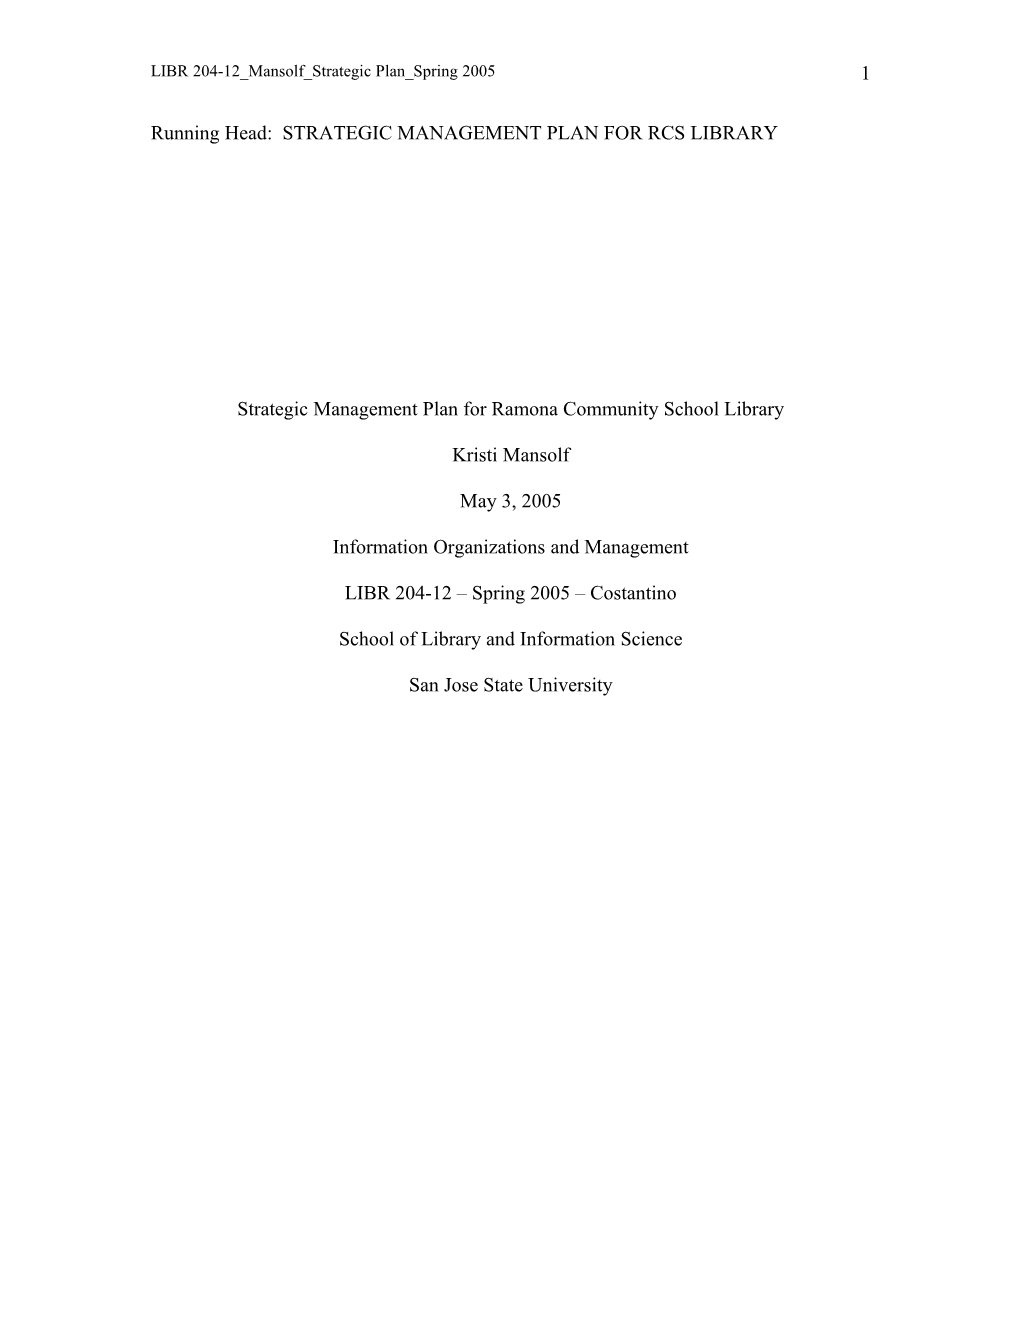 LIBR 204-12 Mansolf Strategic Management Plan Spring 2005